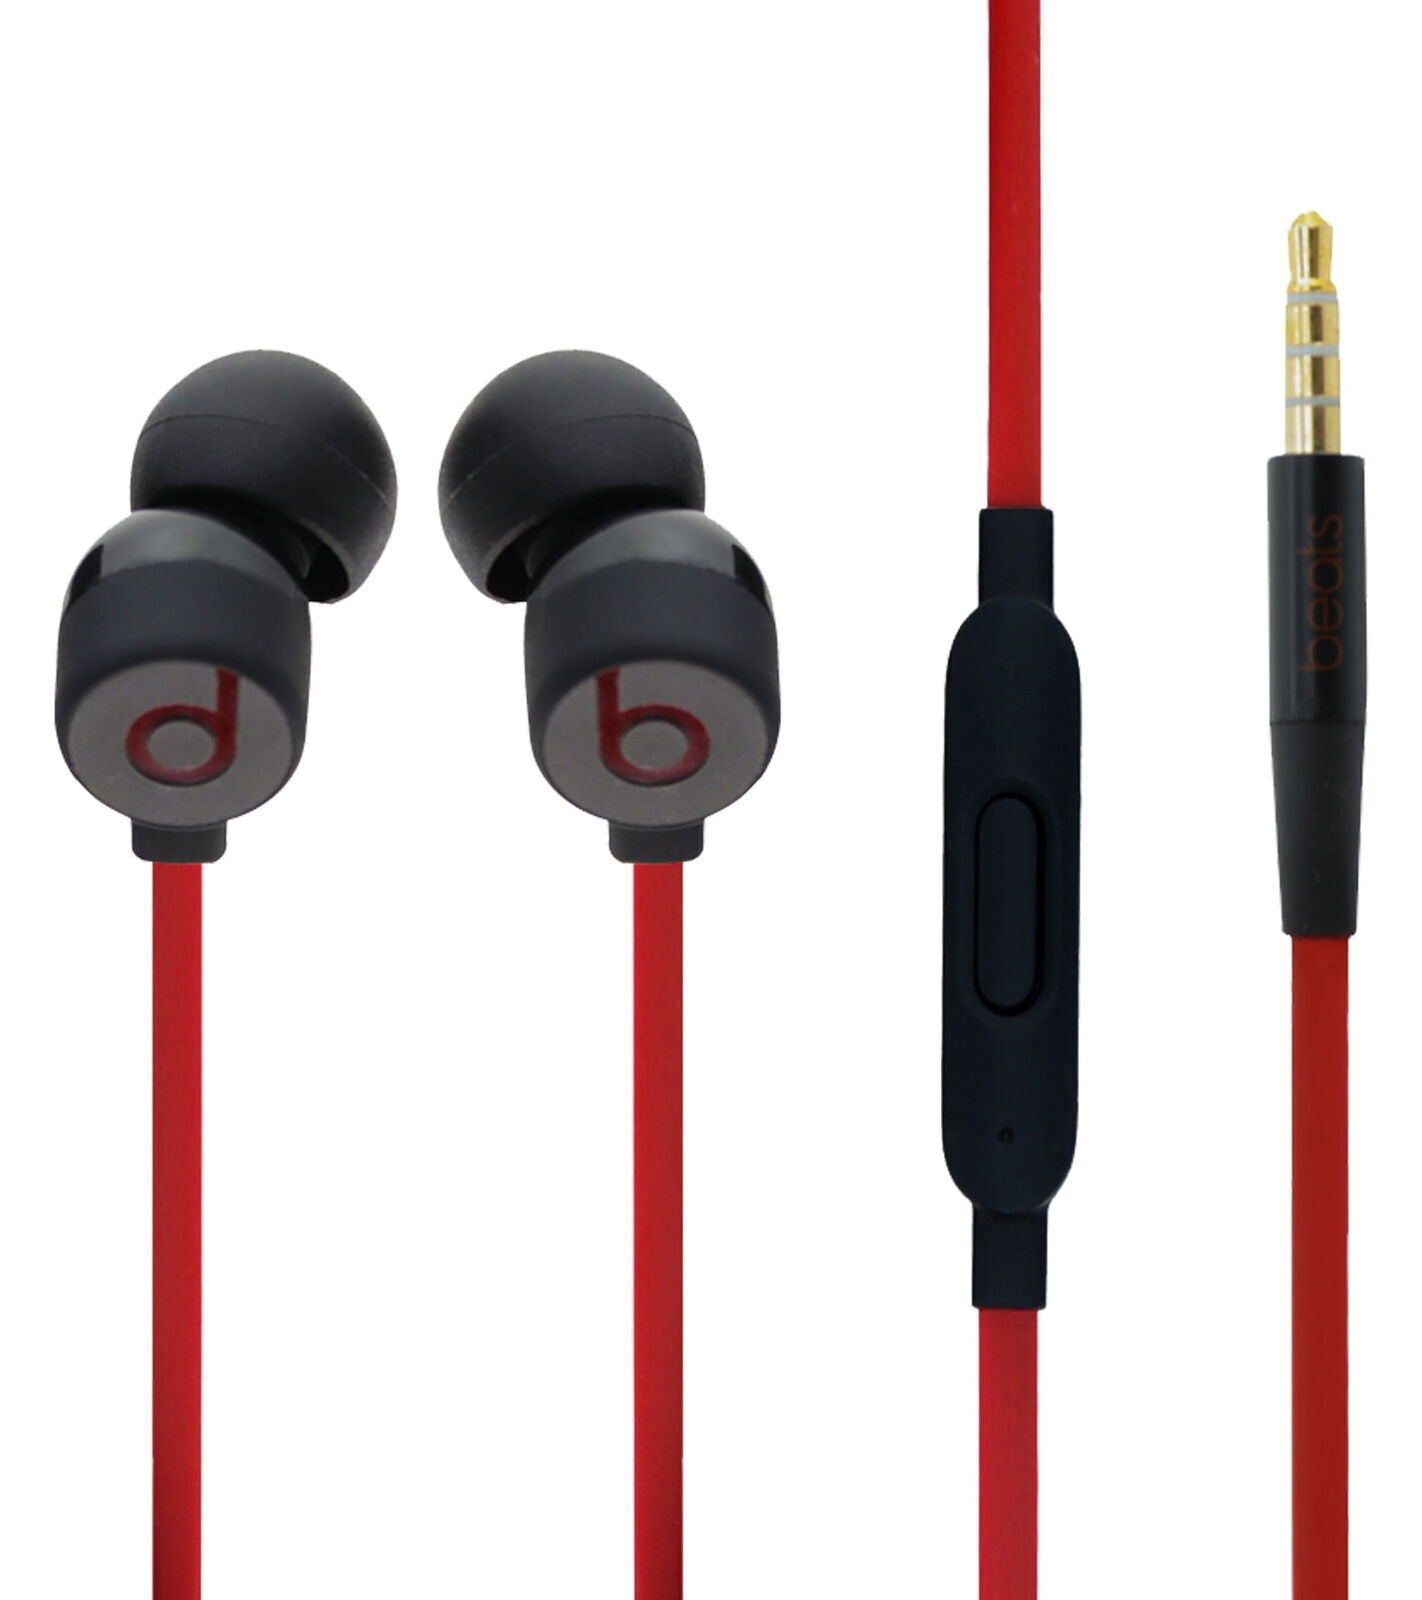 UrBeats3 In-Ear Headphones with 3.5mm Plug (Refurbished)